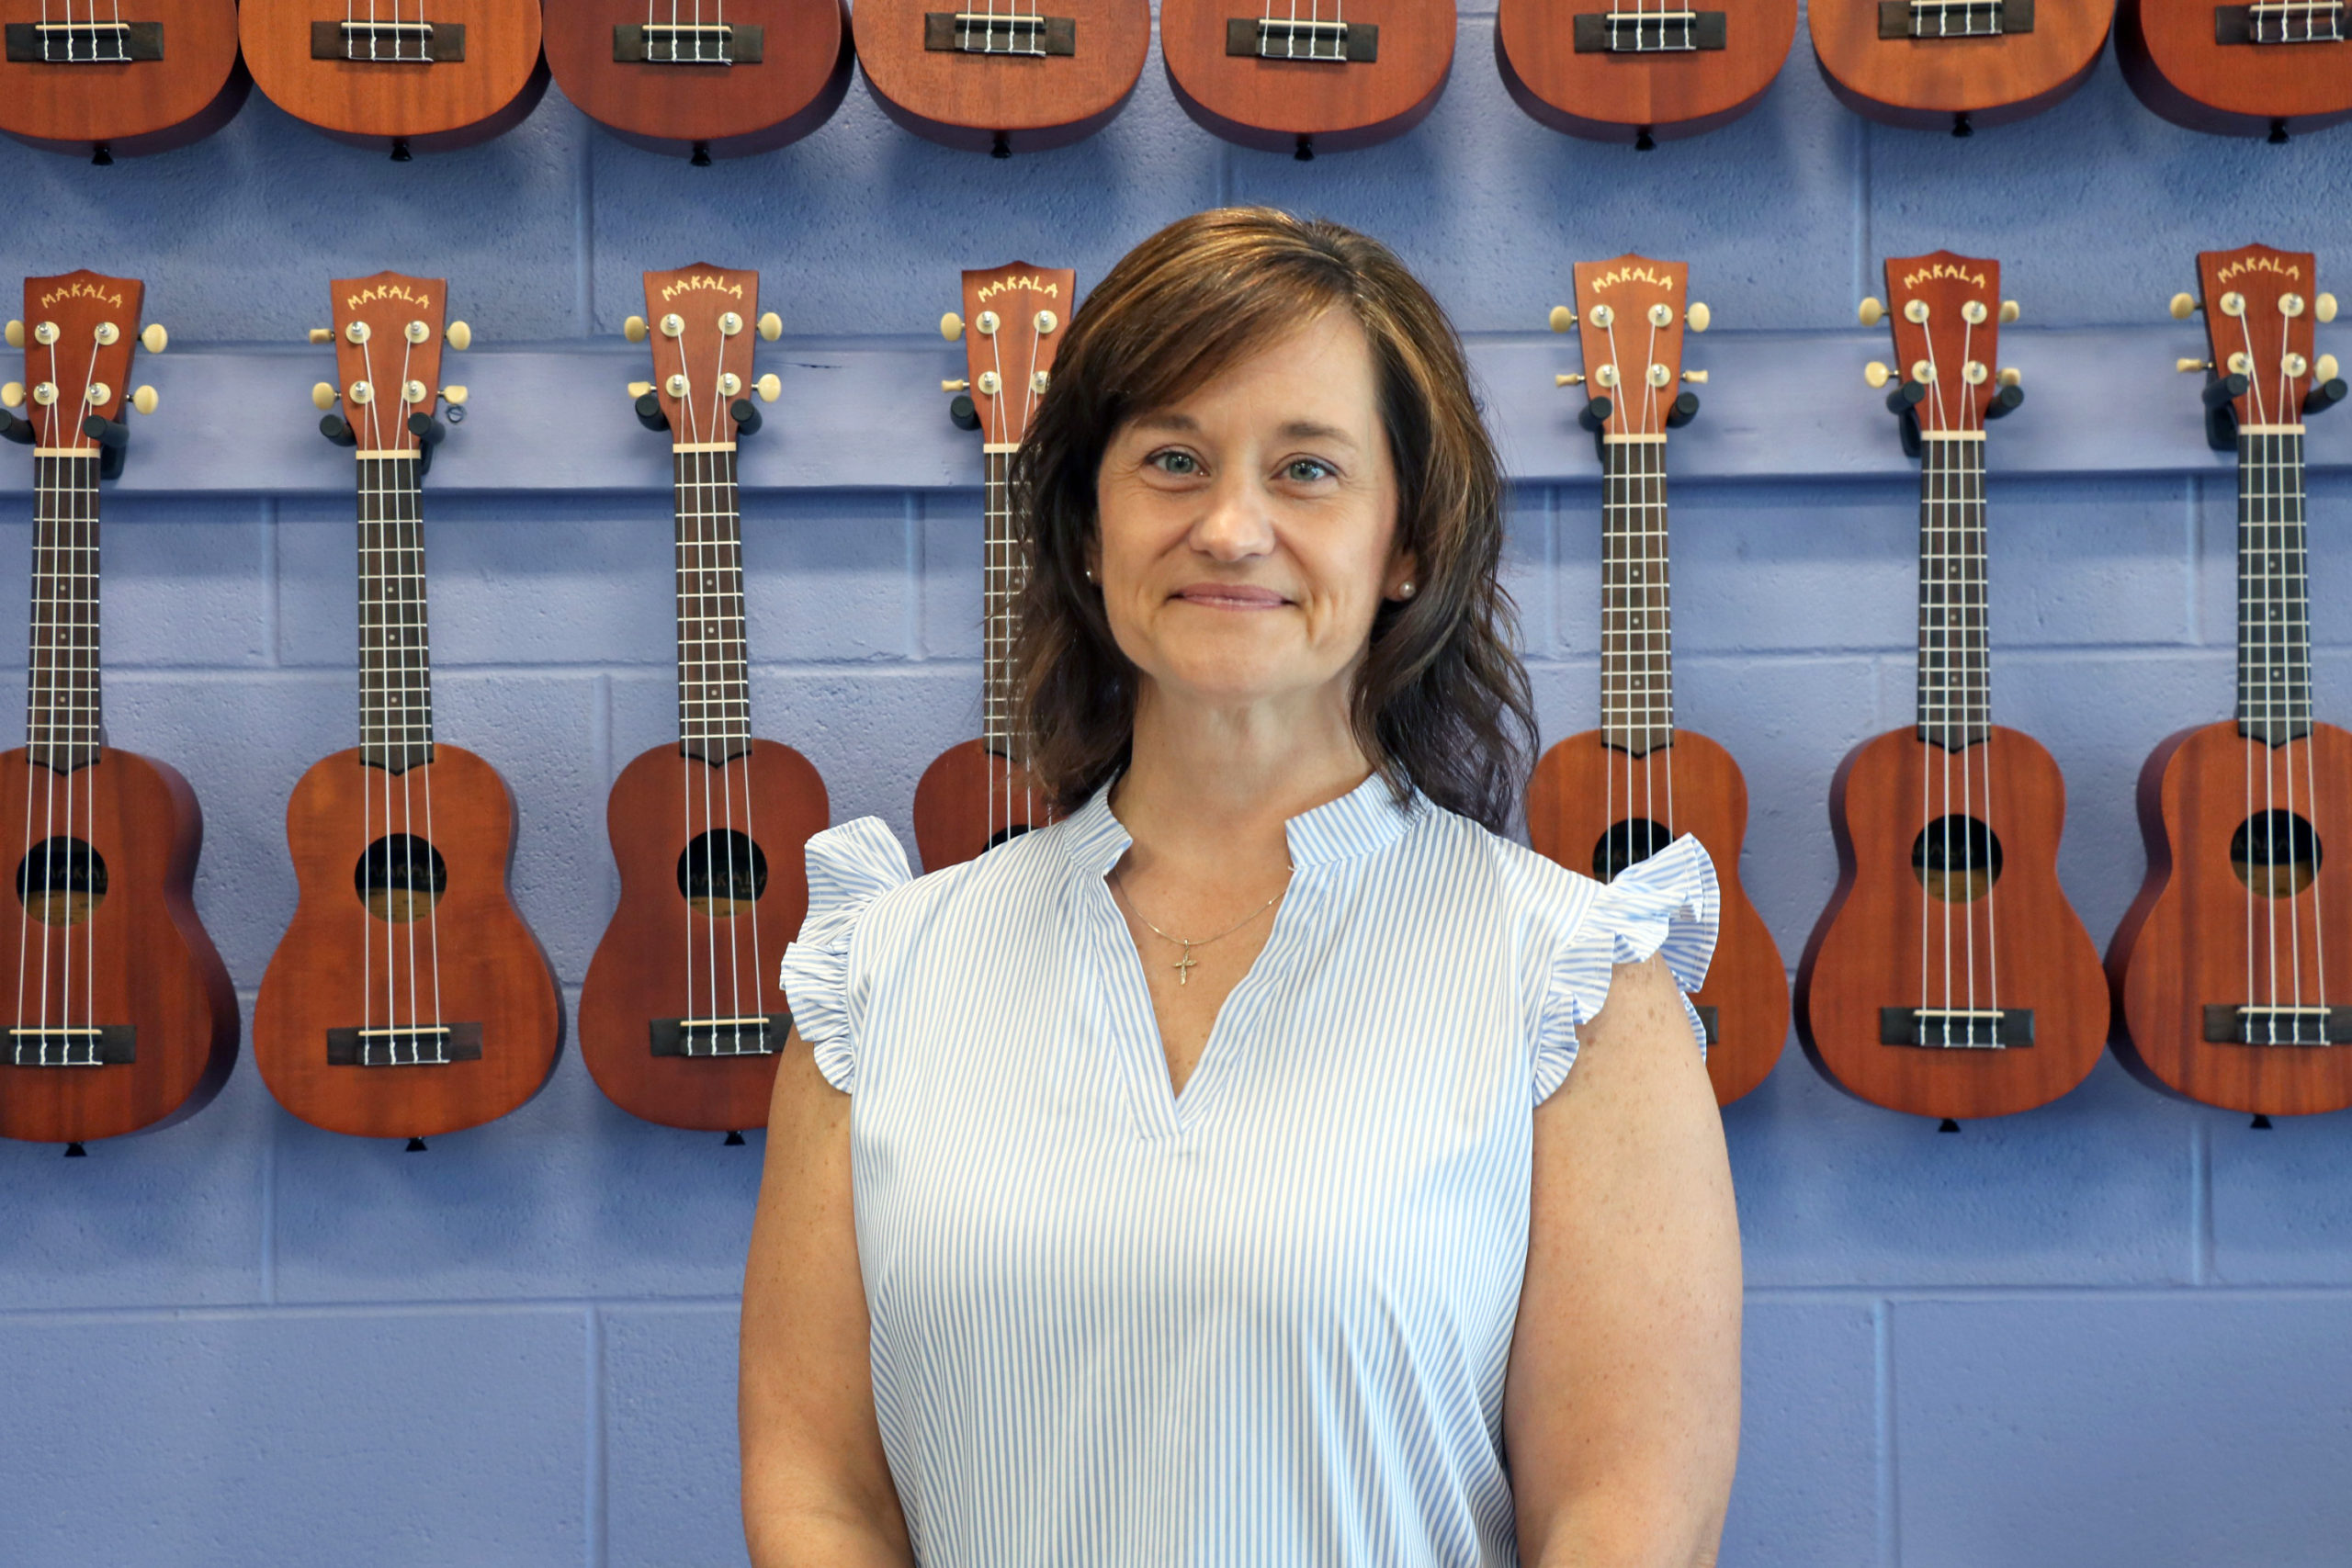 Mrs. Yvette Martin stands in front of her ukuleles